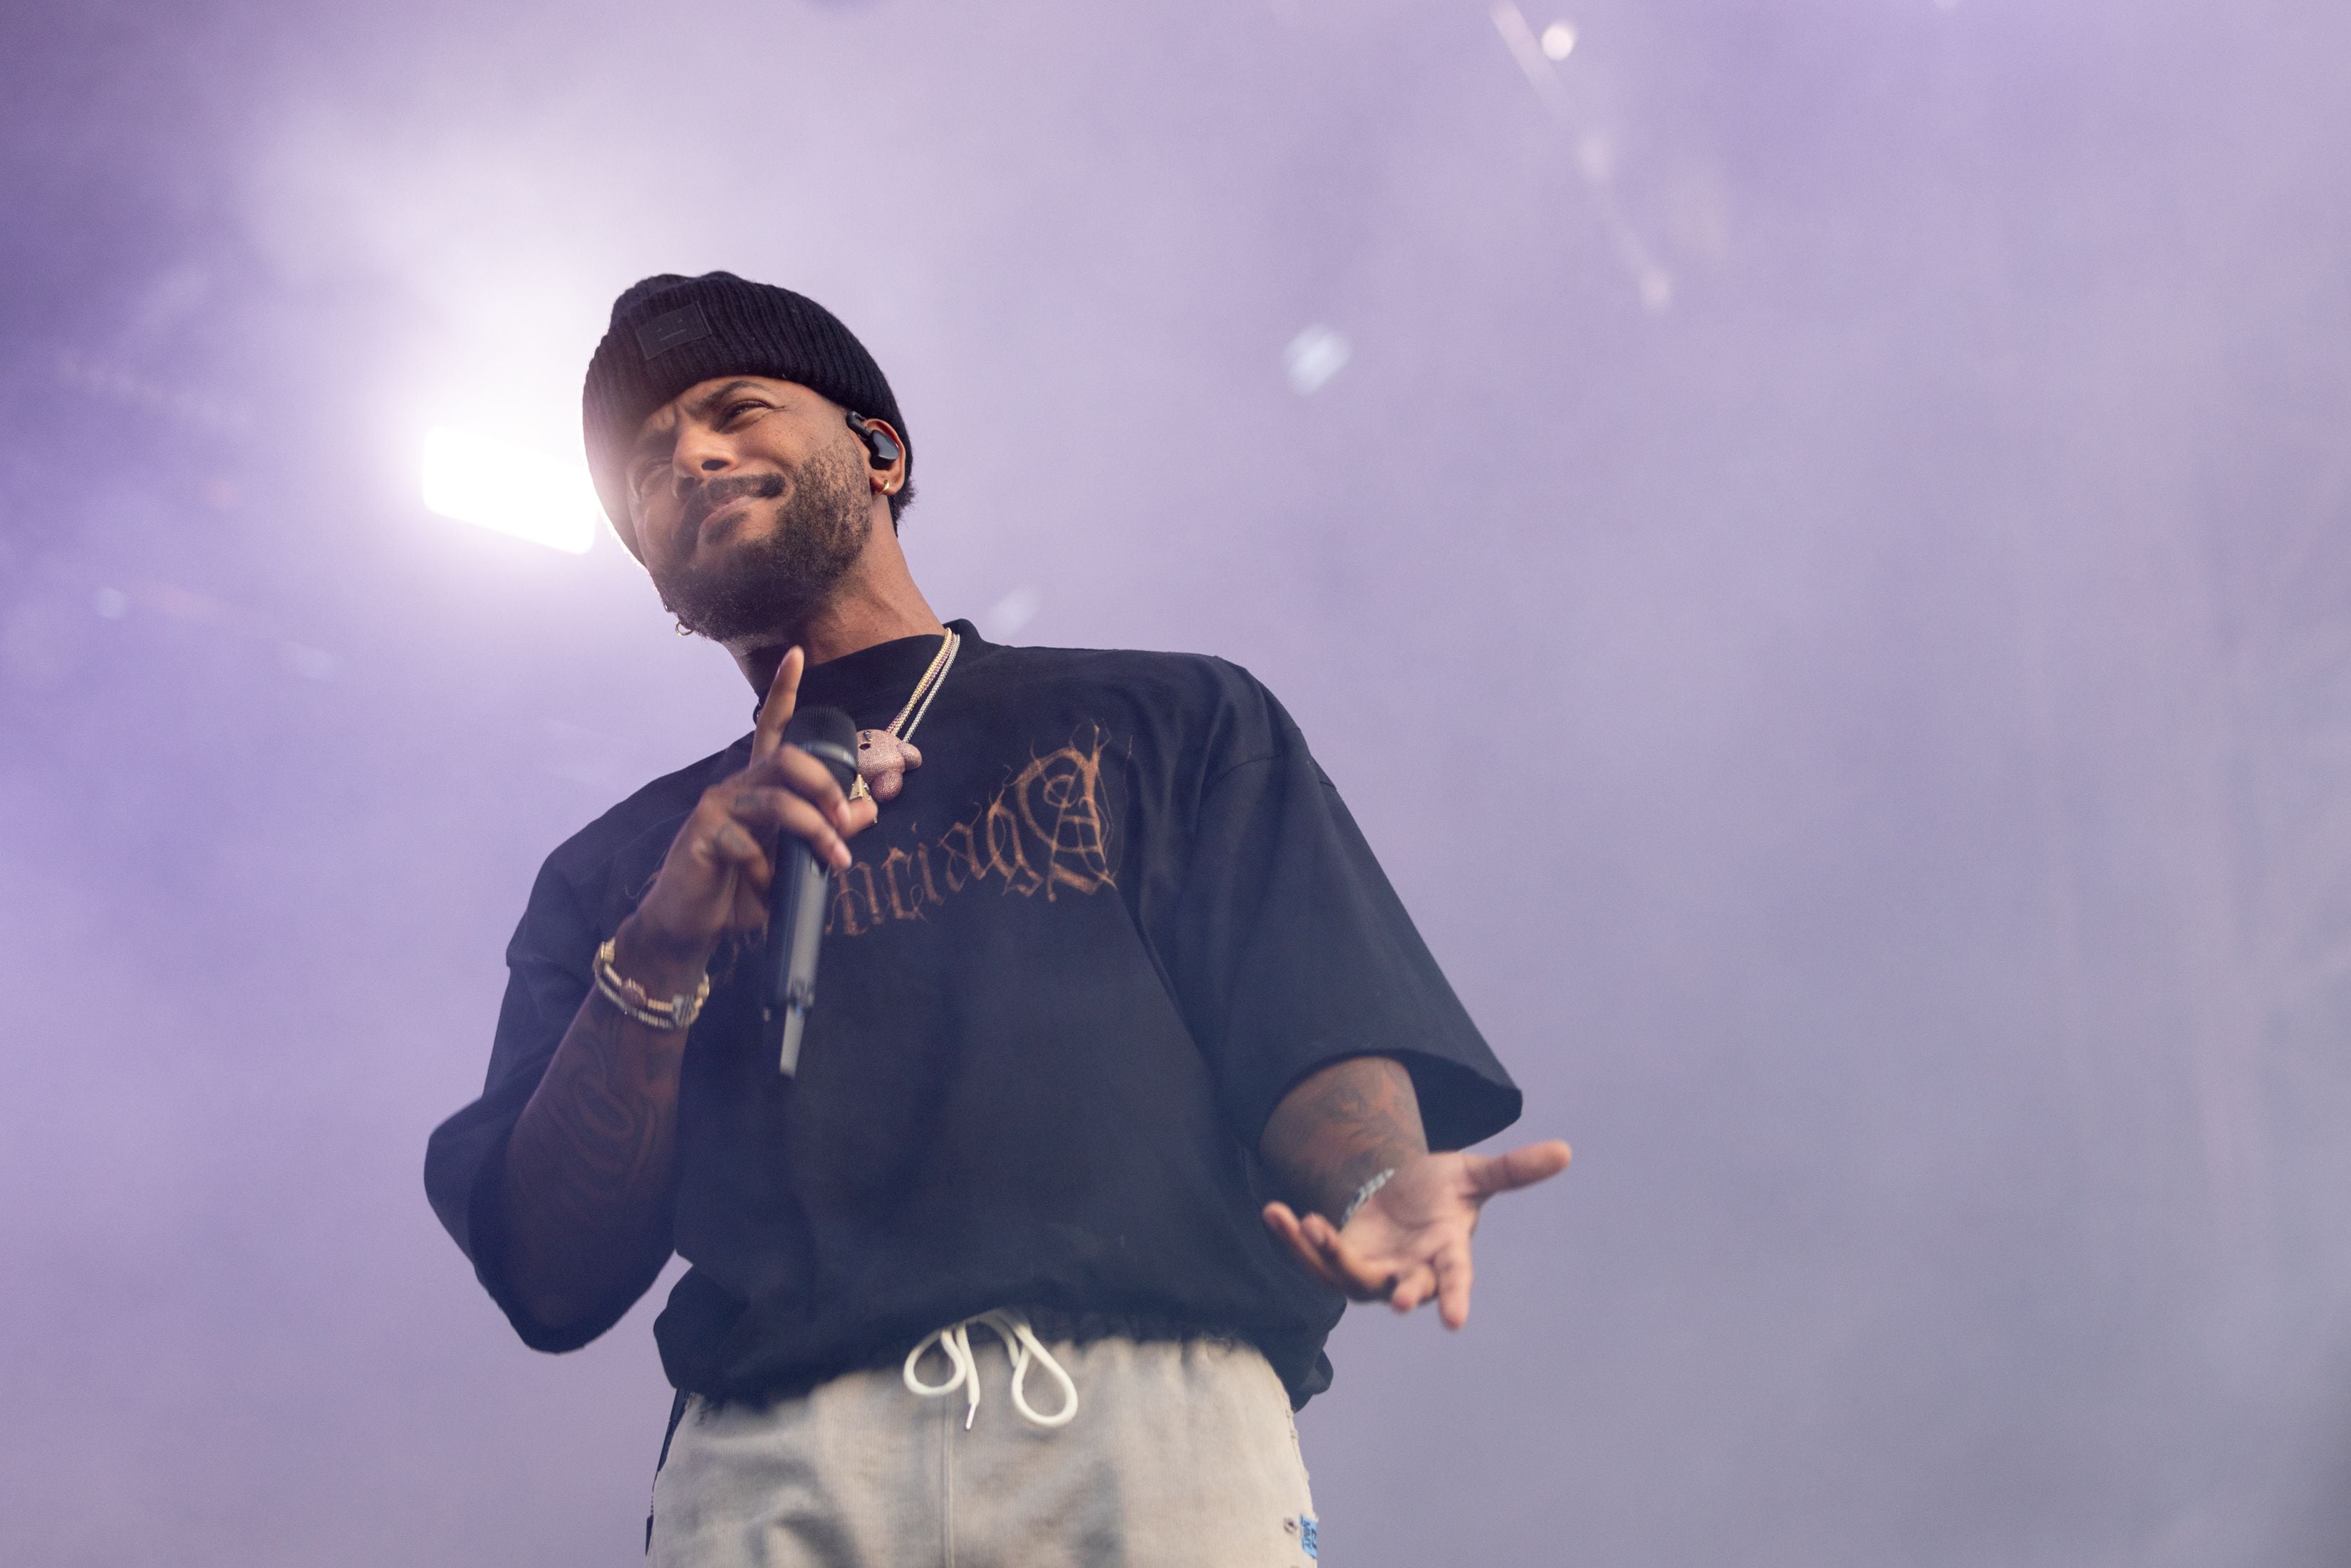 Kendrick Lamar, Janet Jackson and more to headline ONE Musicfest